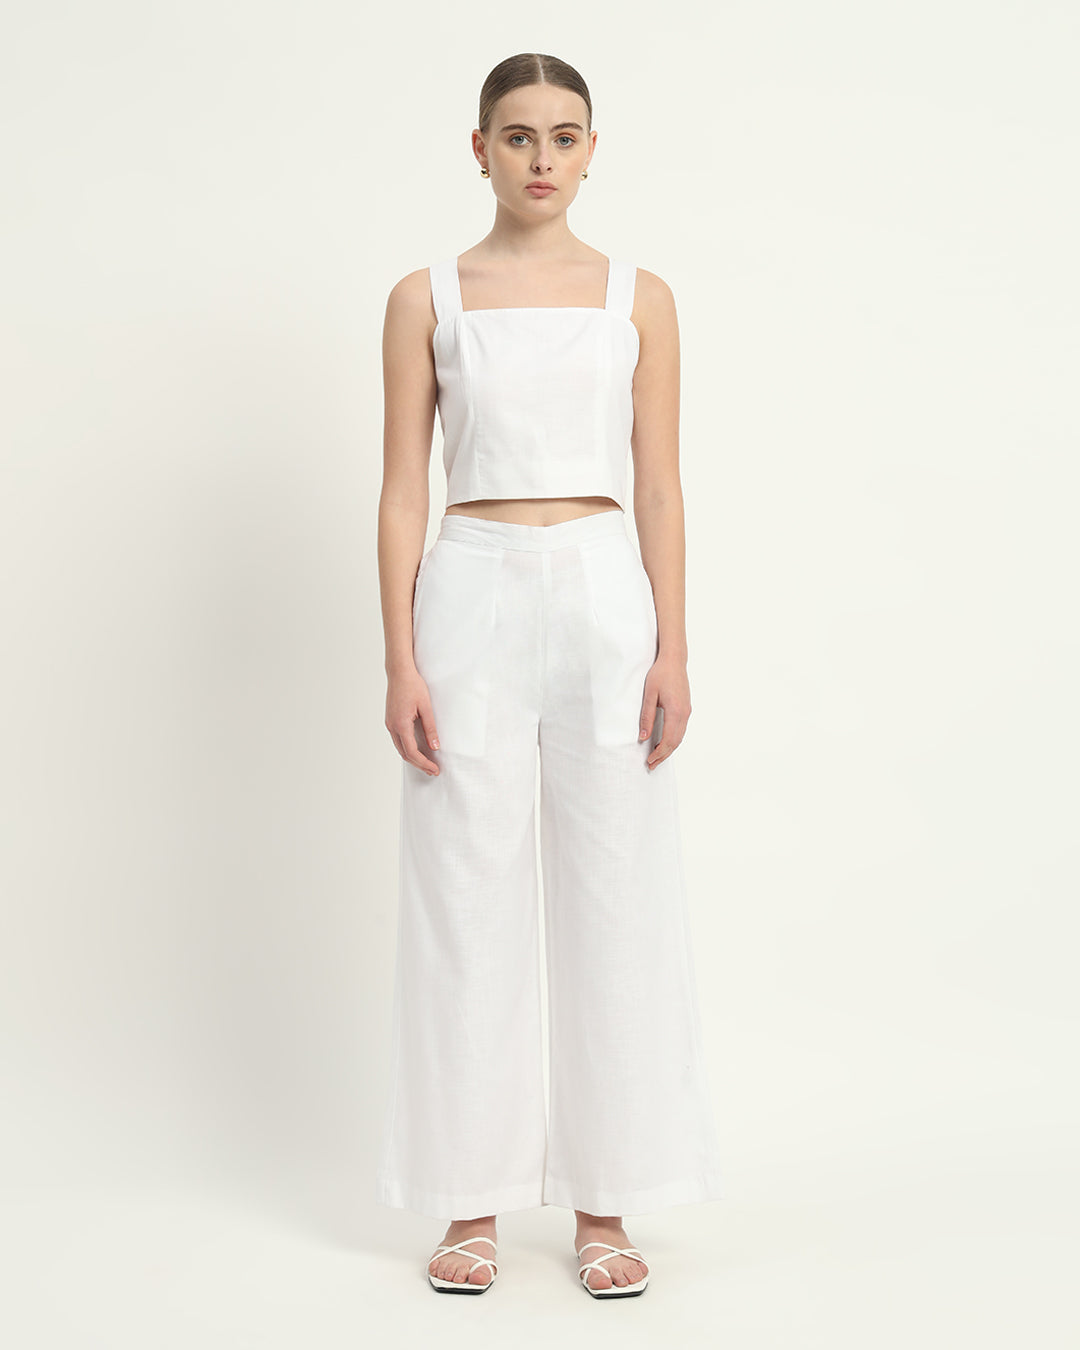 Pants Matching Set- White Linen Sleek Square